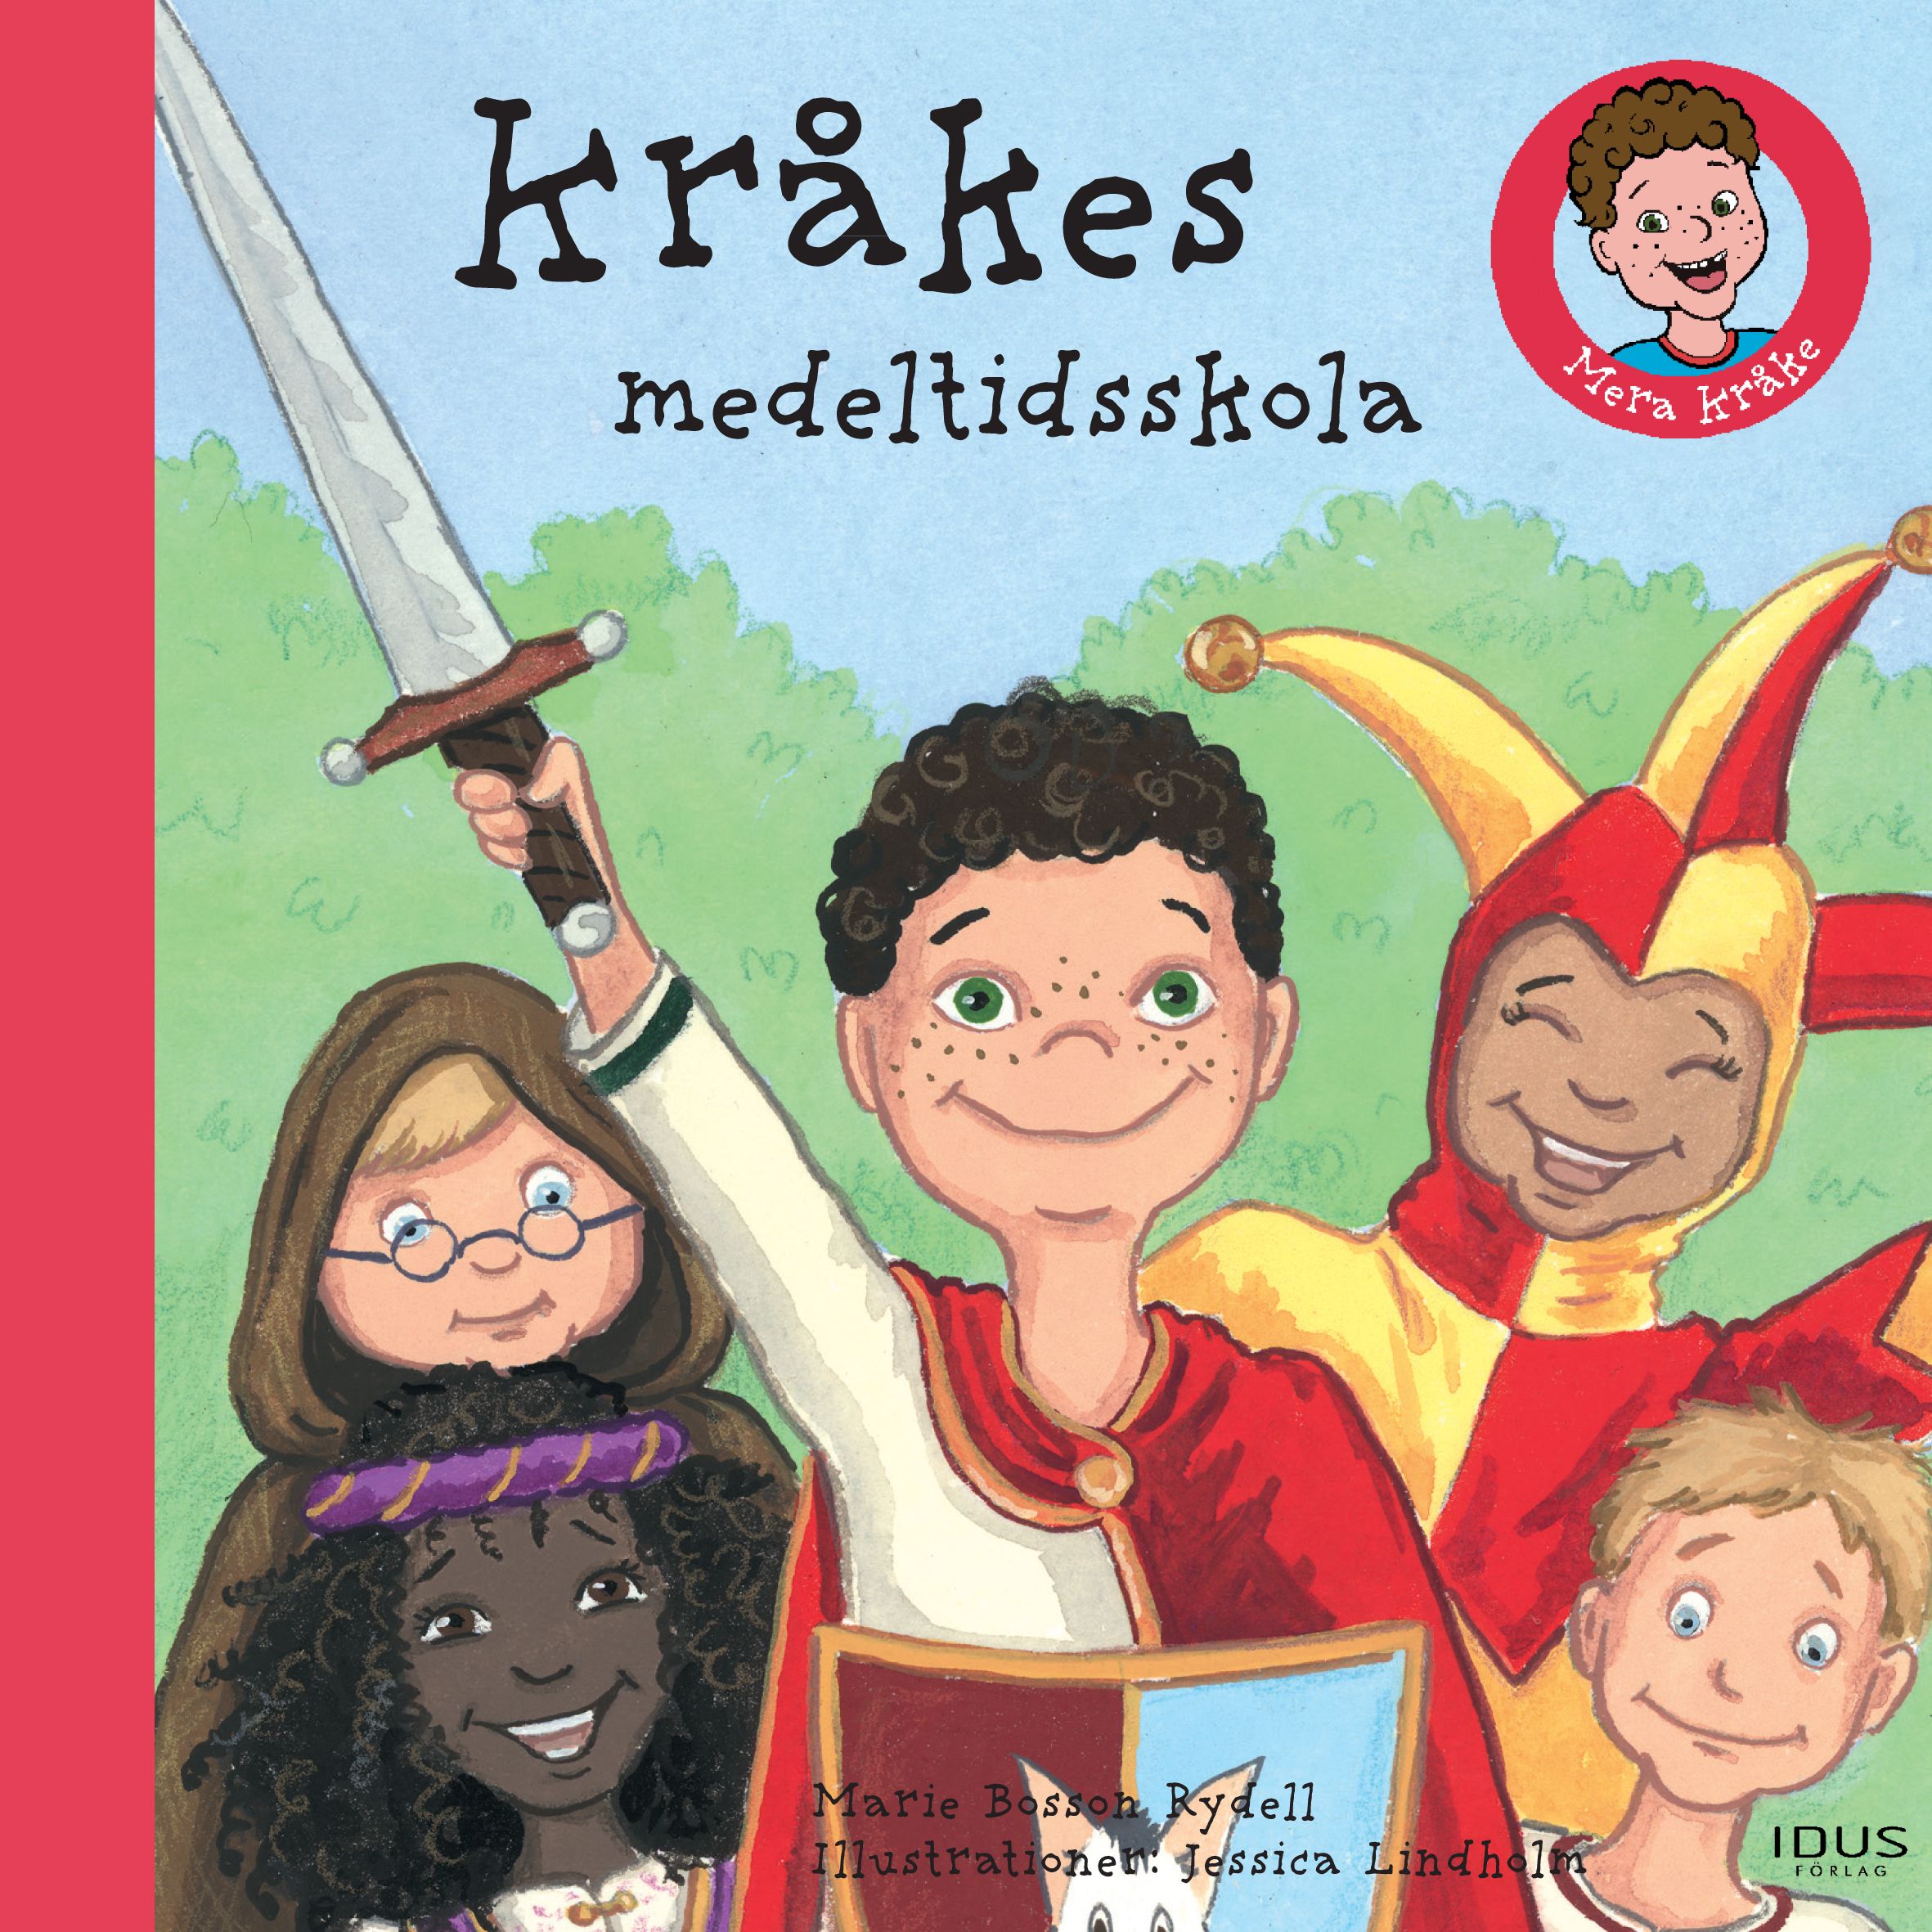 Kråkes medeltidsskola, audiobook by Marie Bosson Rydell